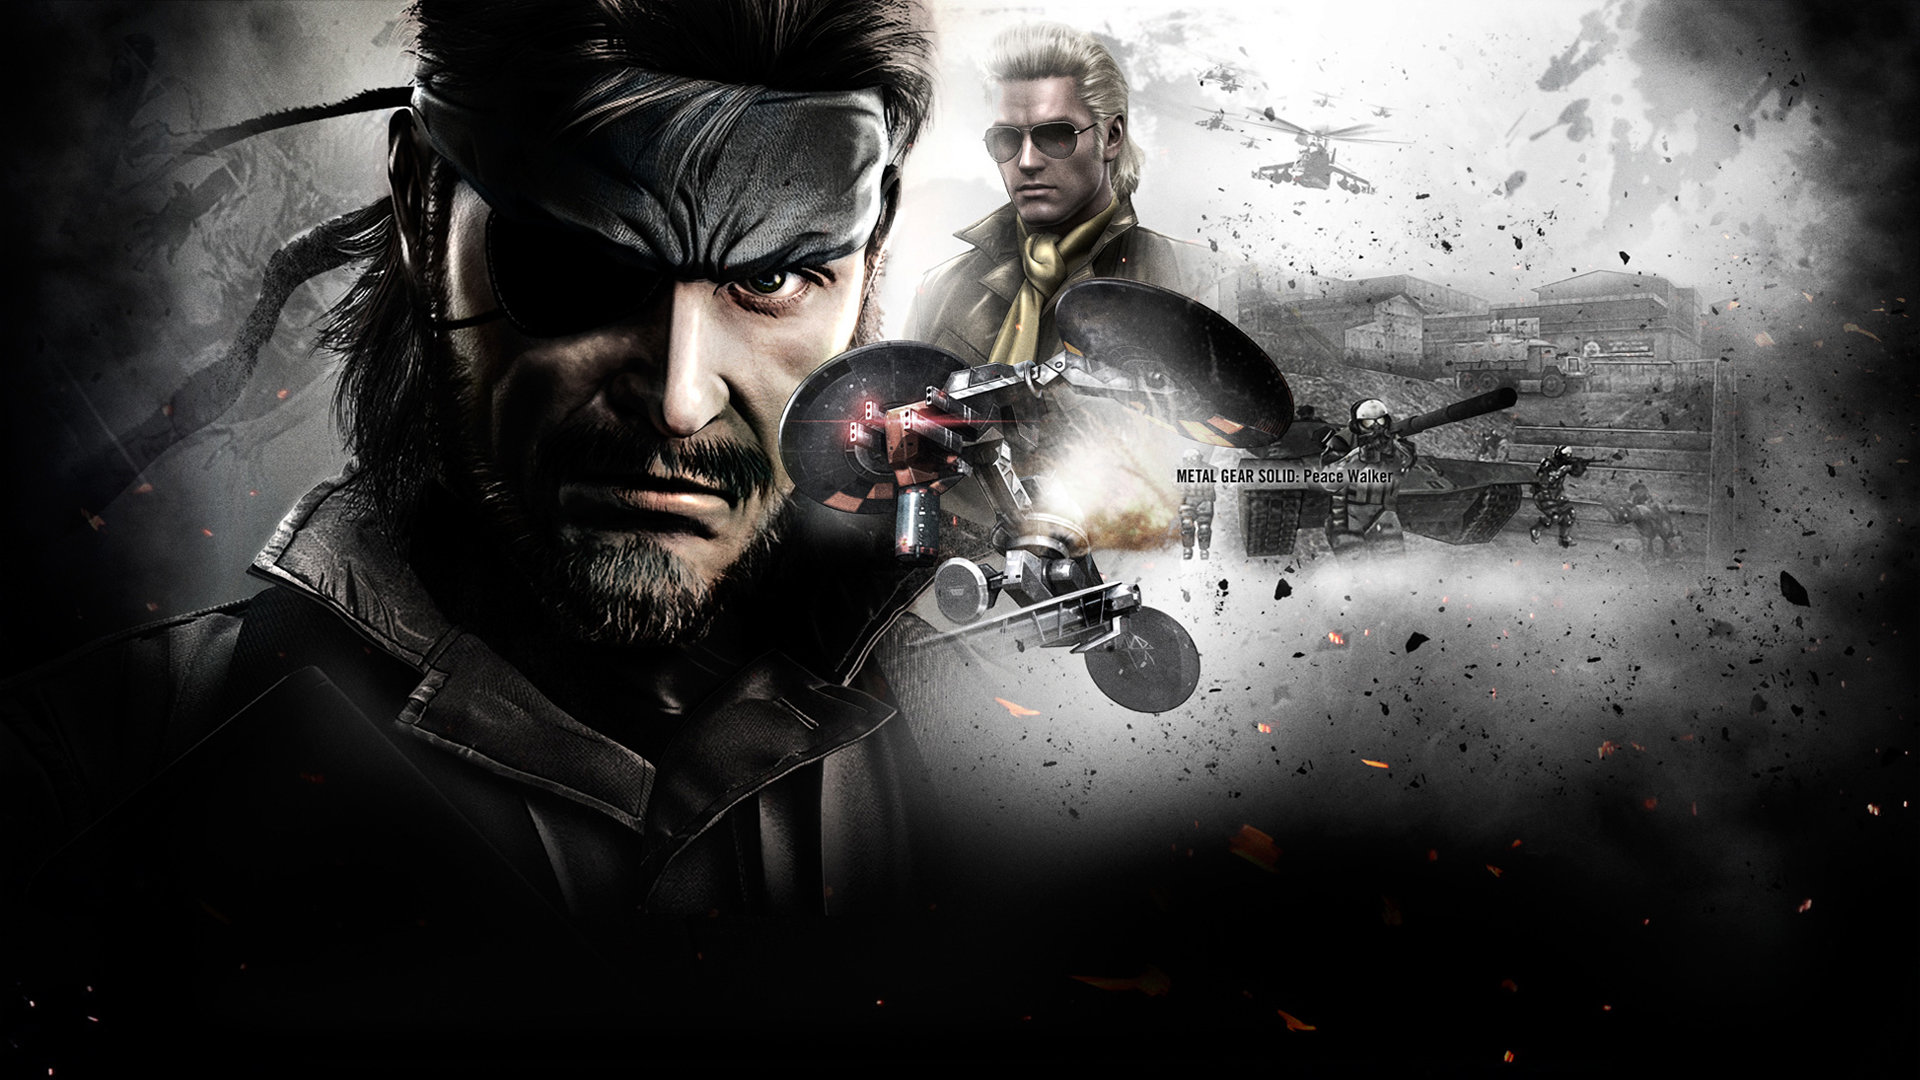 Free download Metal Gear Solid (MGS) wallpaper ID:121058 1080p for desktop